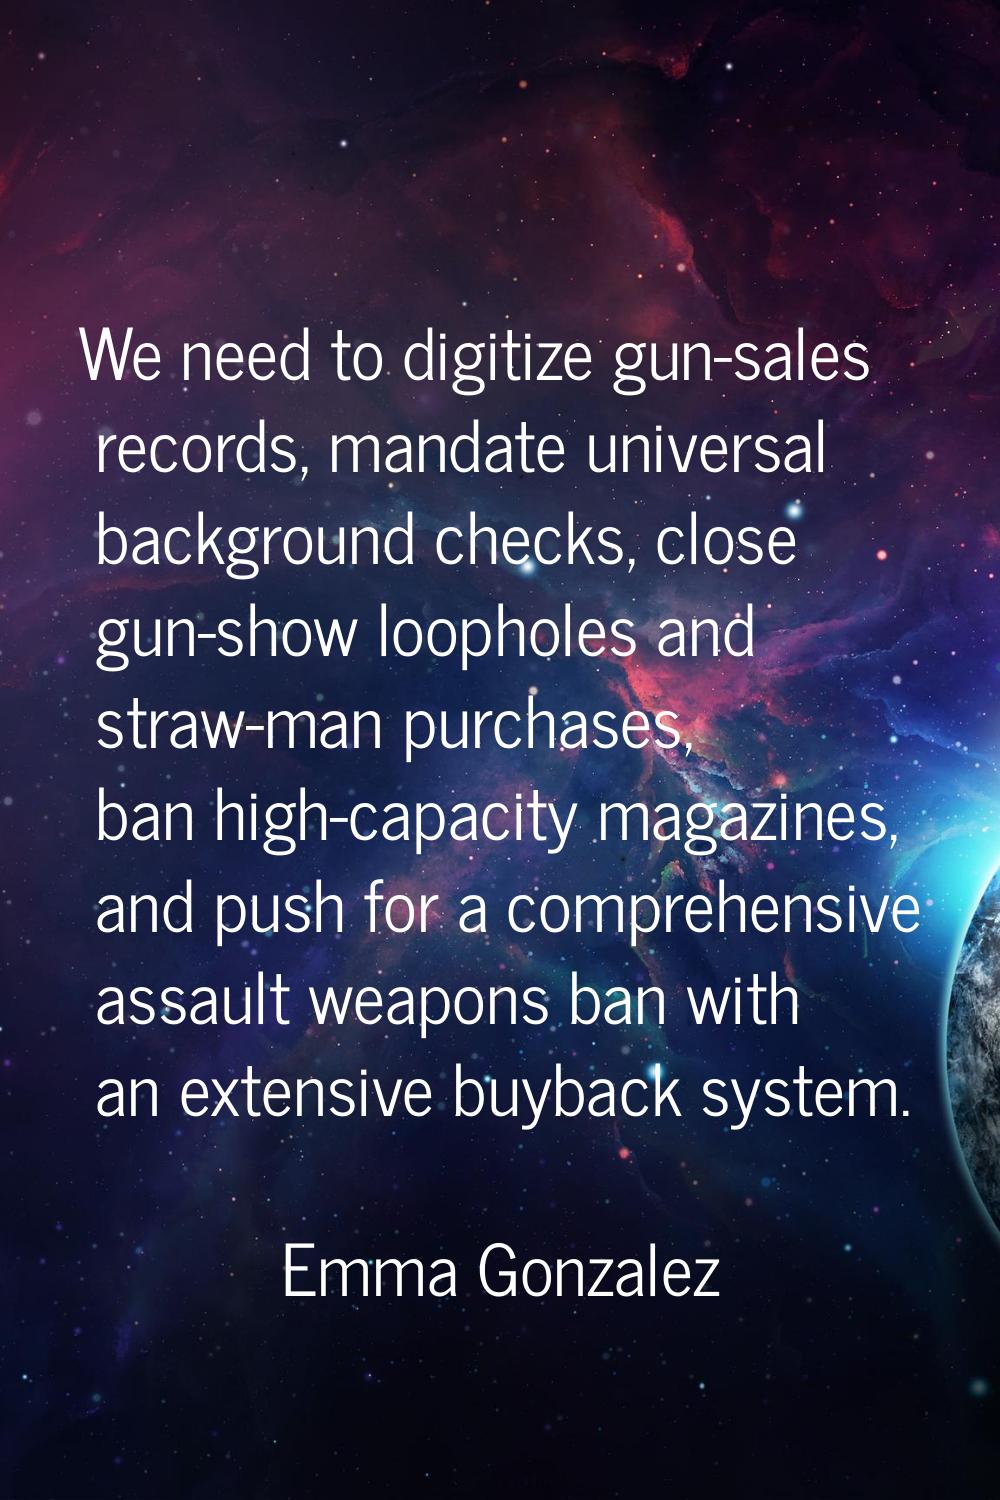 We need to digitize gun-sales records, mandate universal background checks, close gun-show loophole